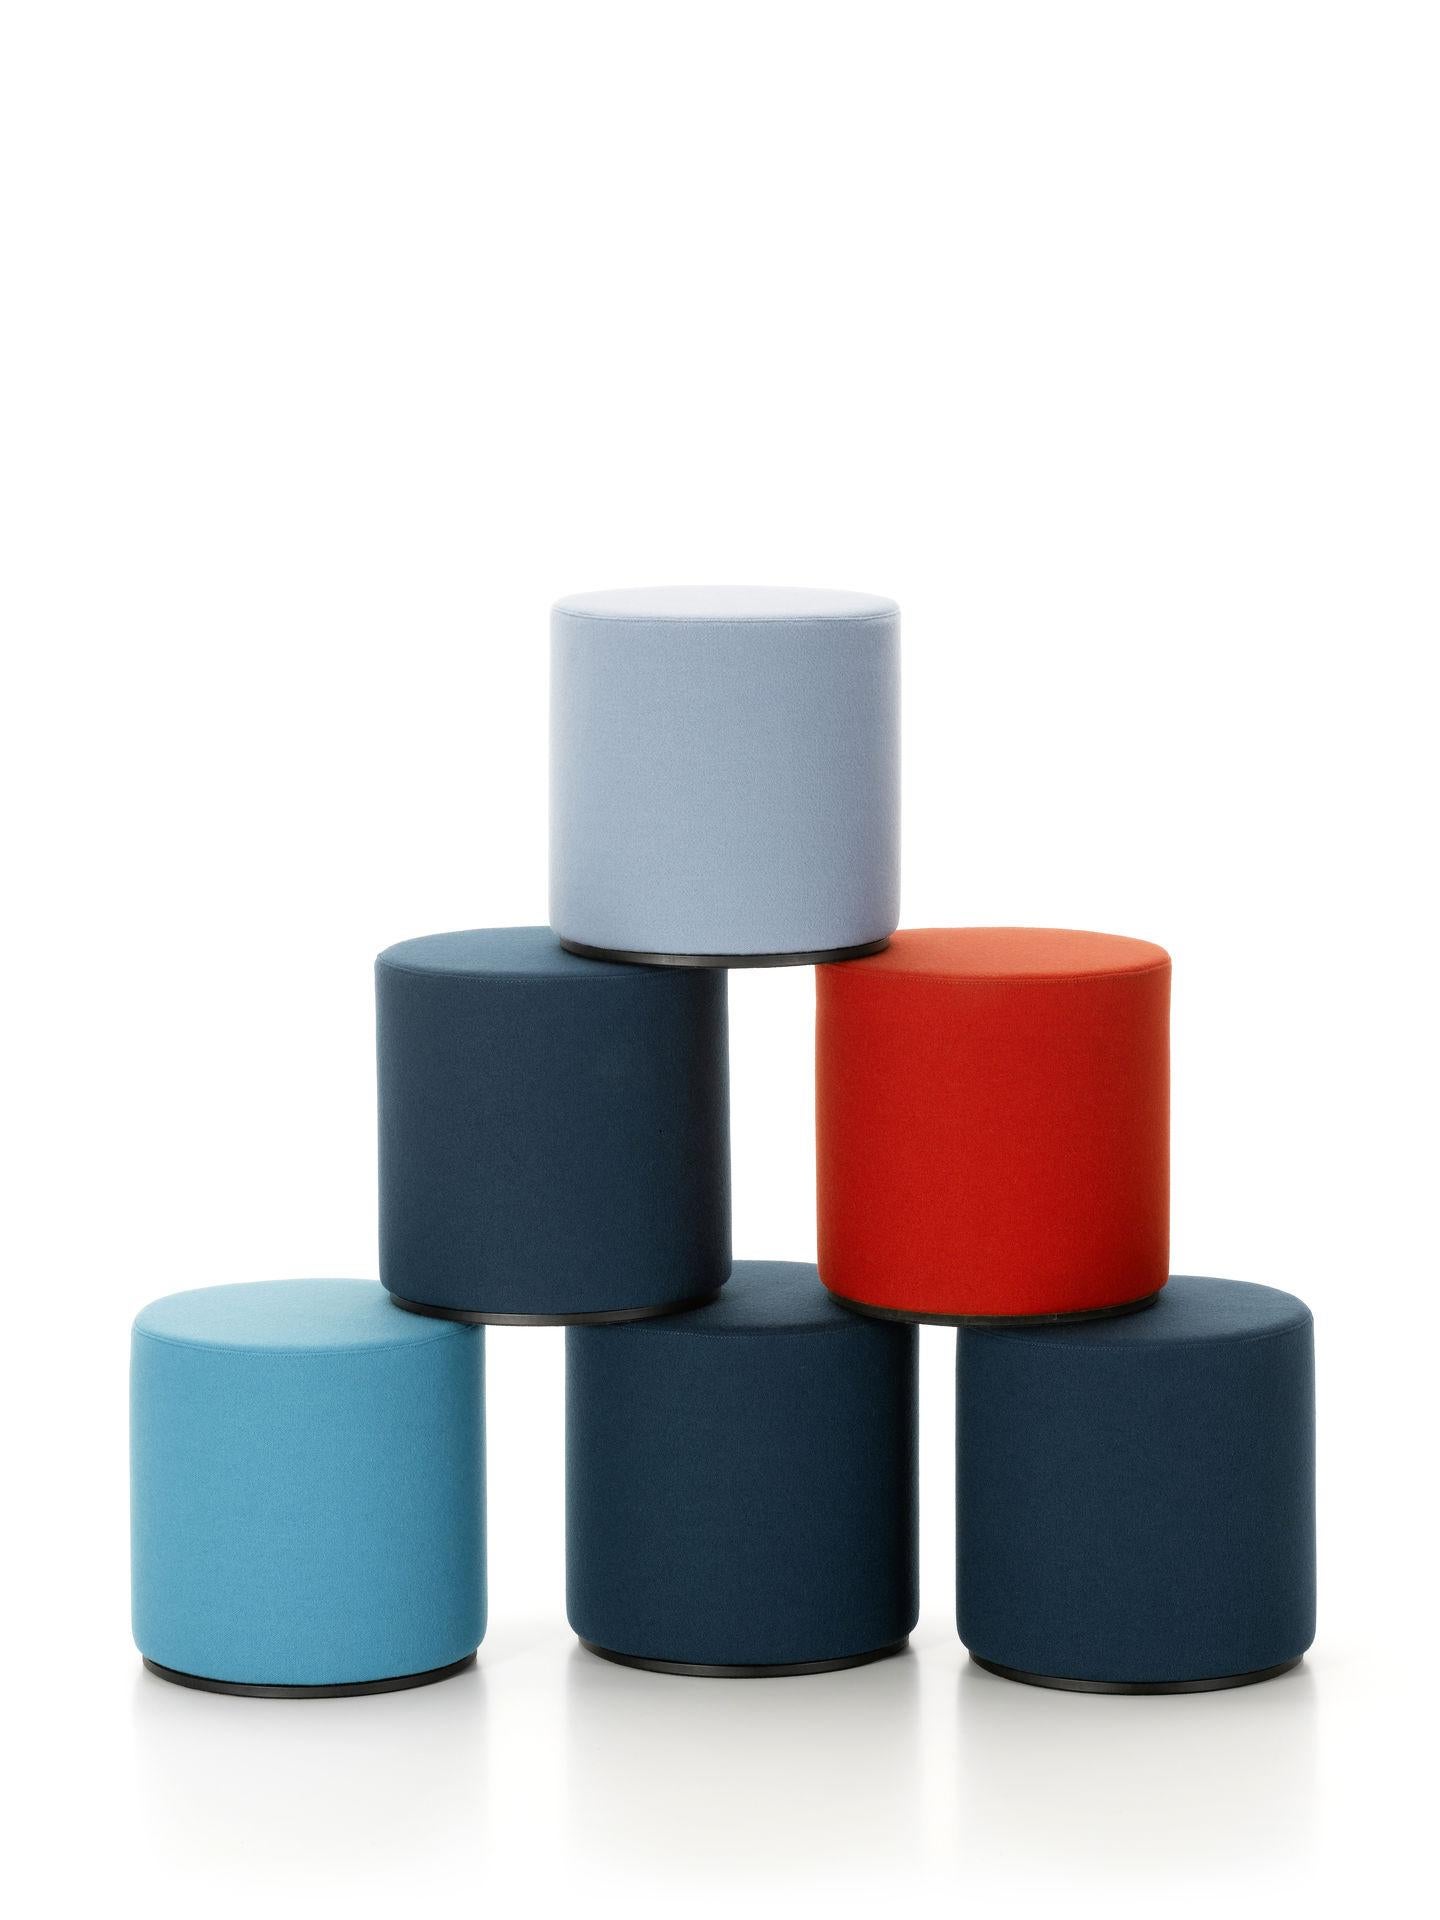 Foam Set of Five Visiona Stools Designed by Verner Panton by Vitra